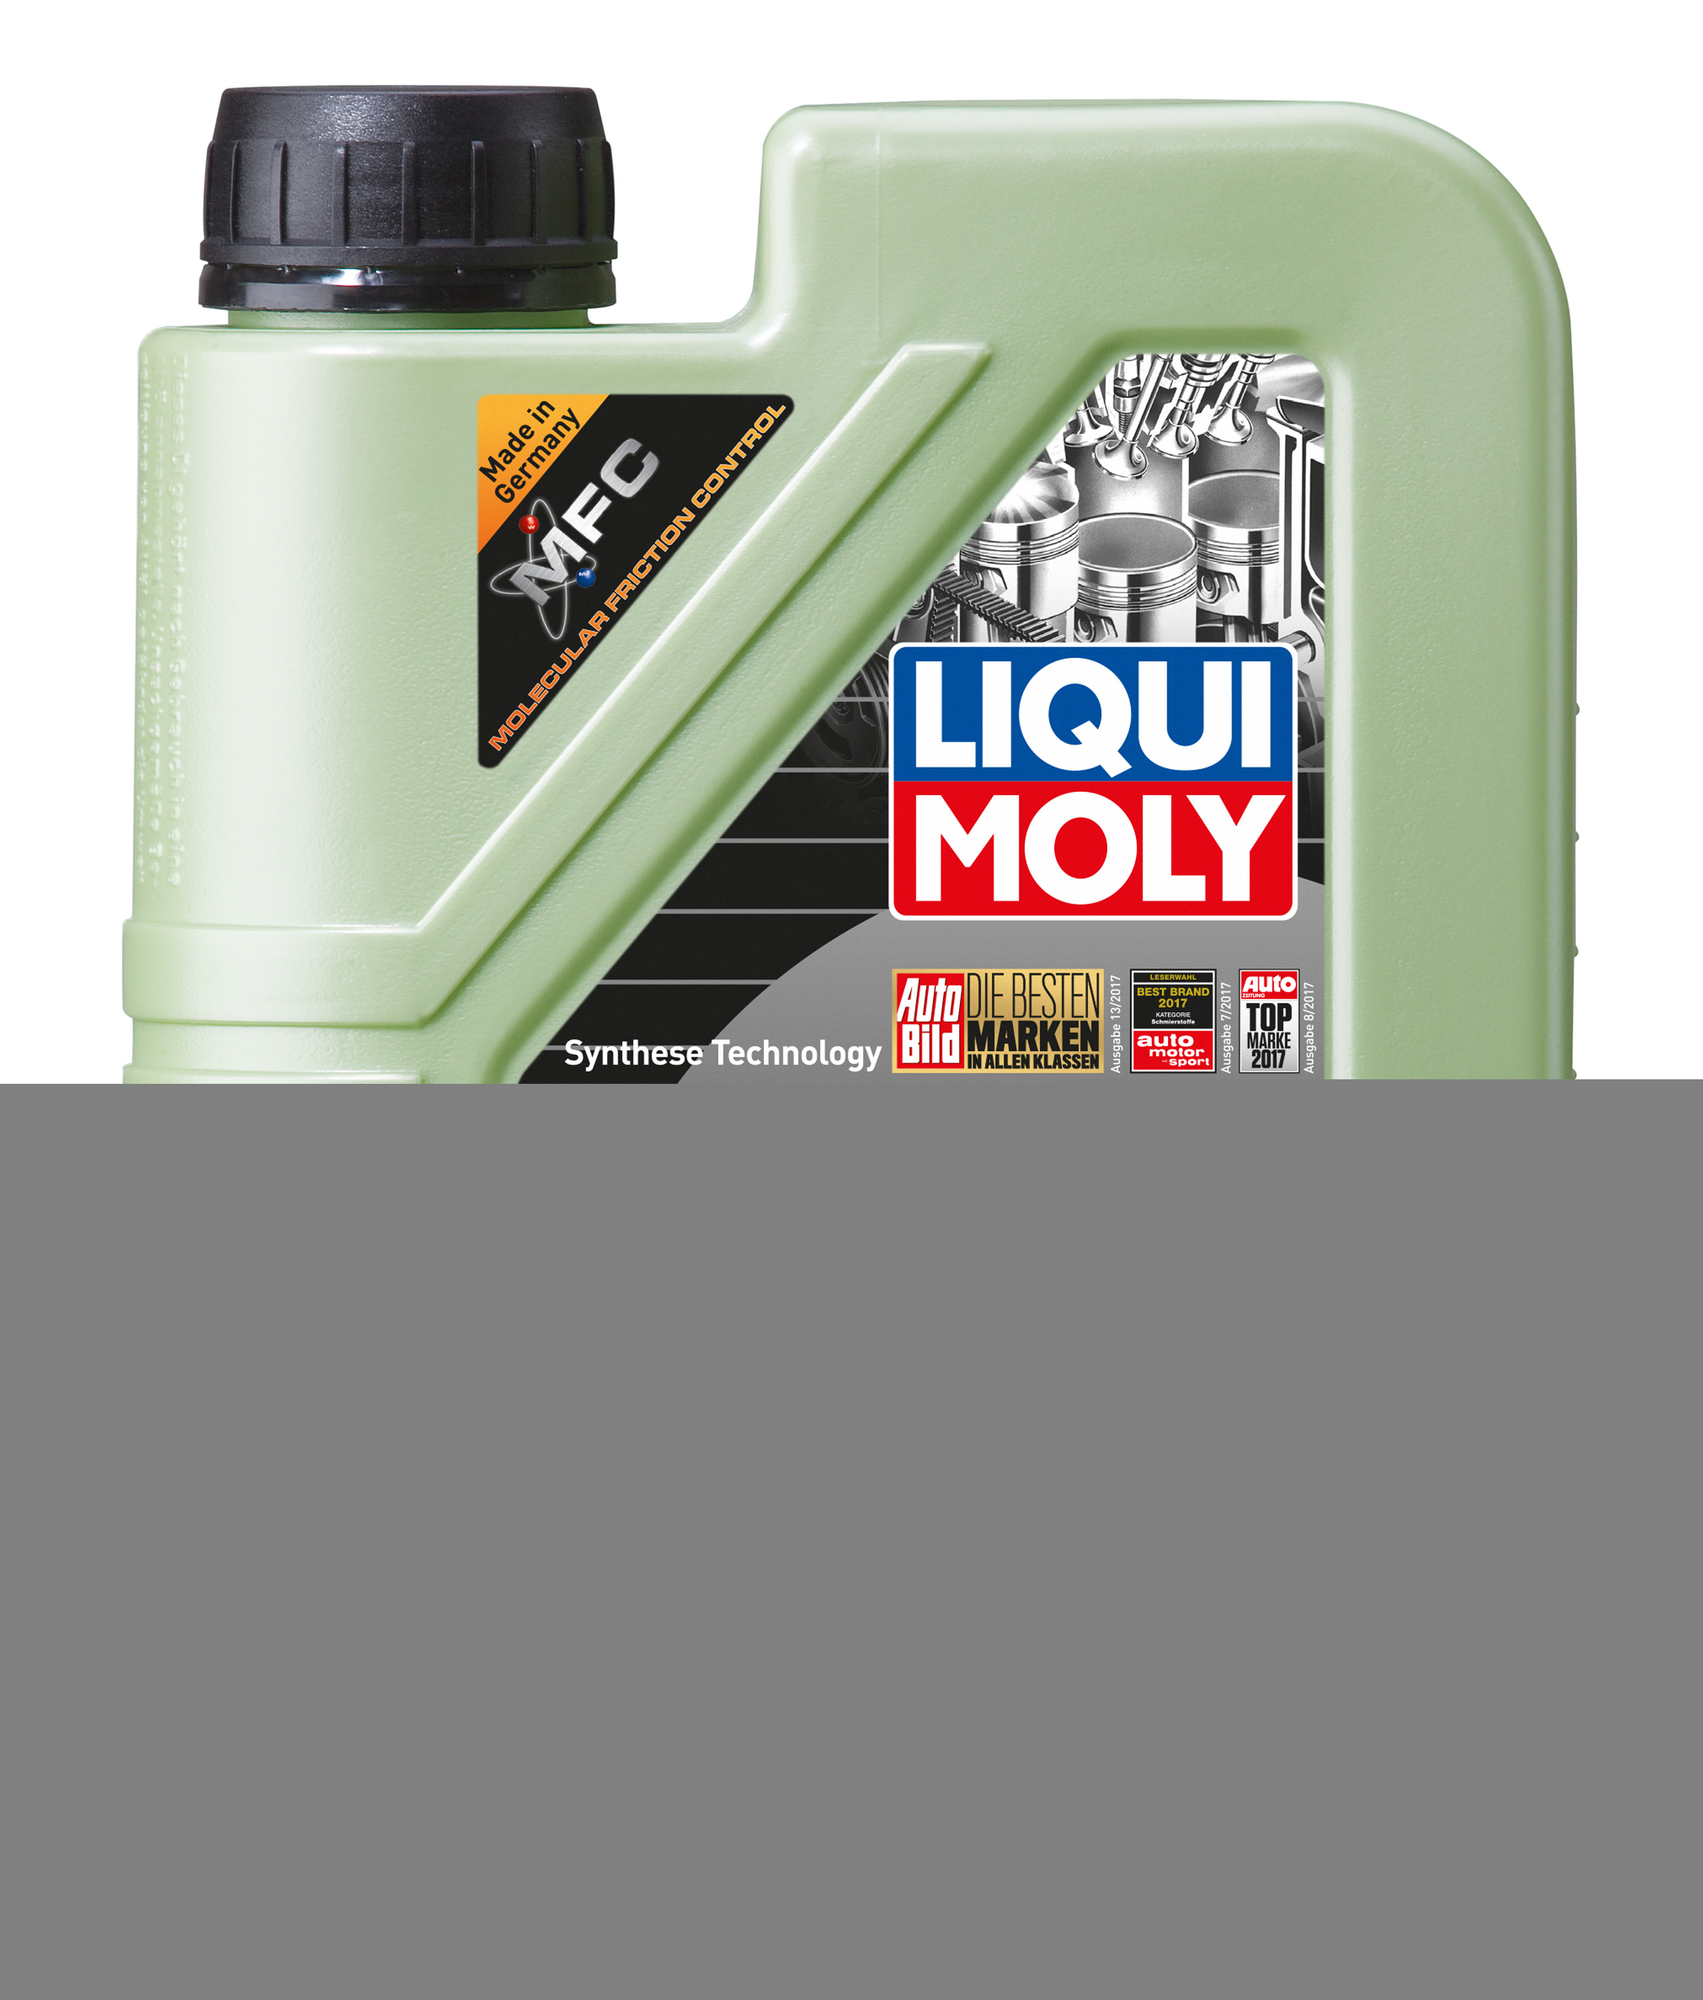 HC-синтетическое моторное масло LIQUI MOLY Molygen New Generation 5W-30